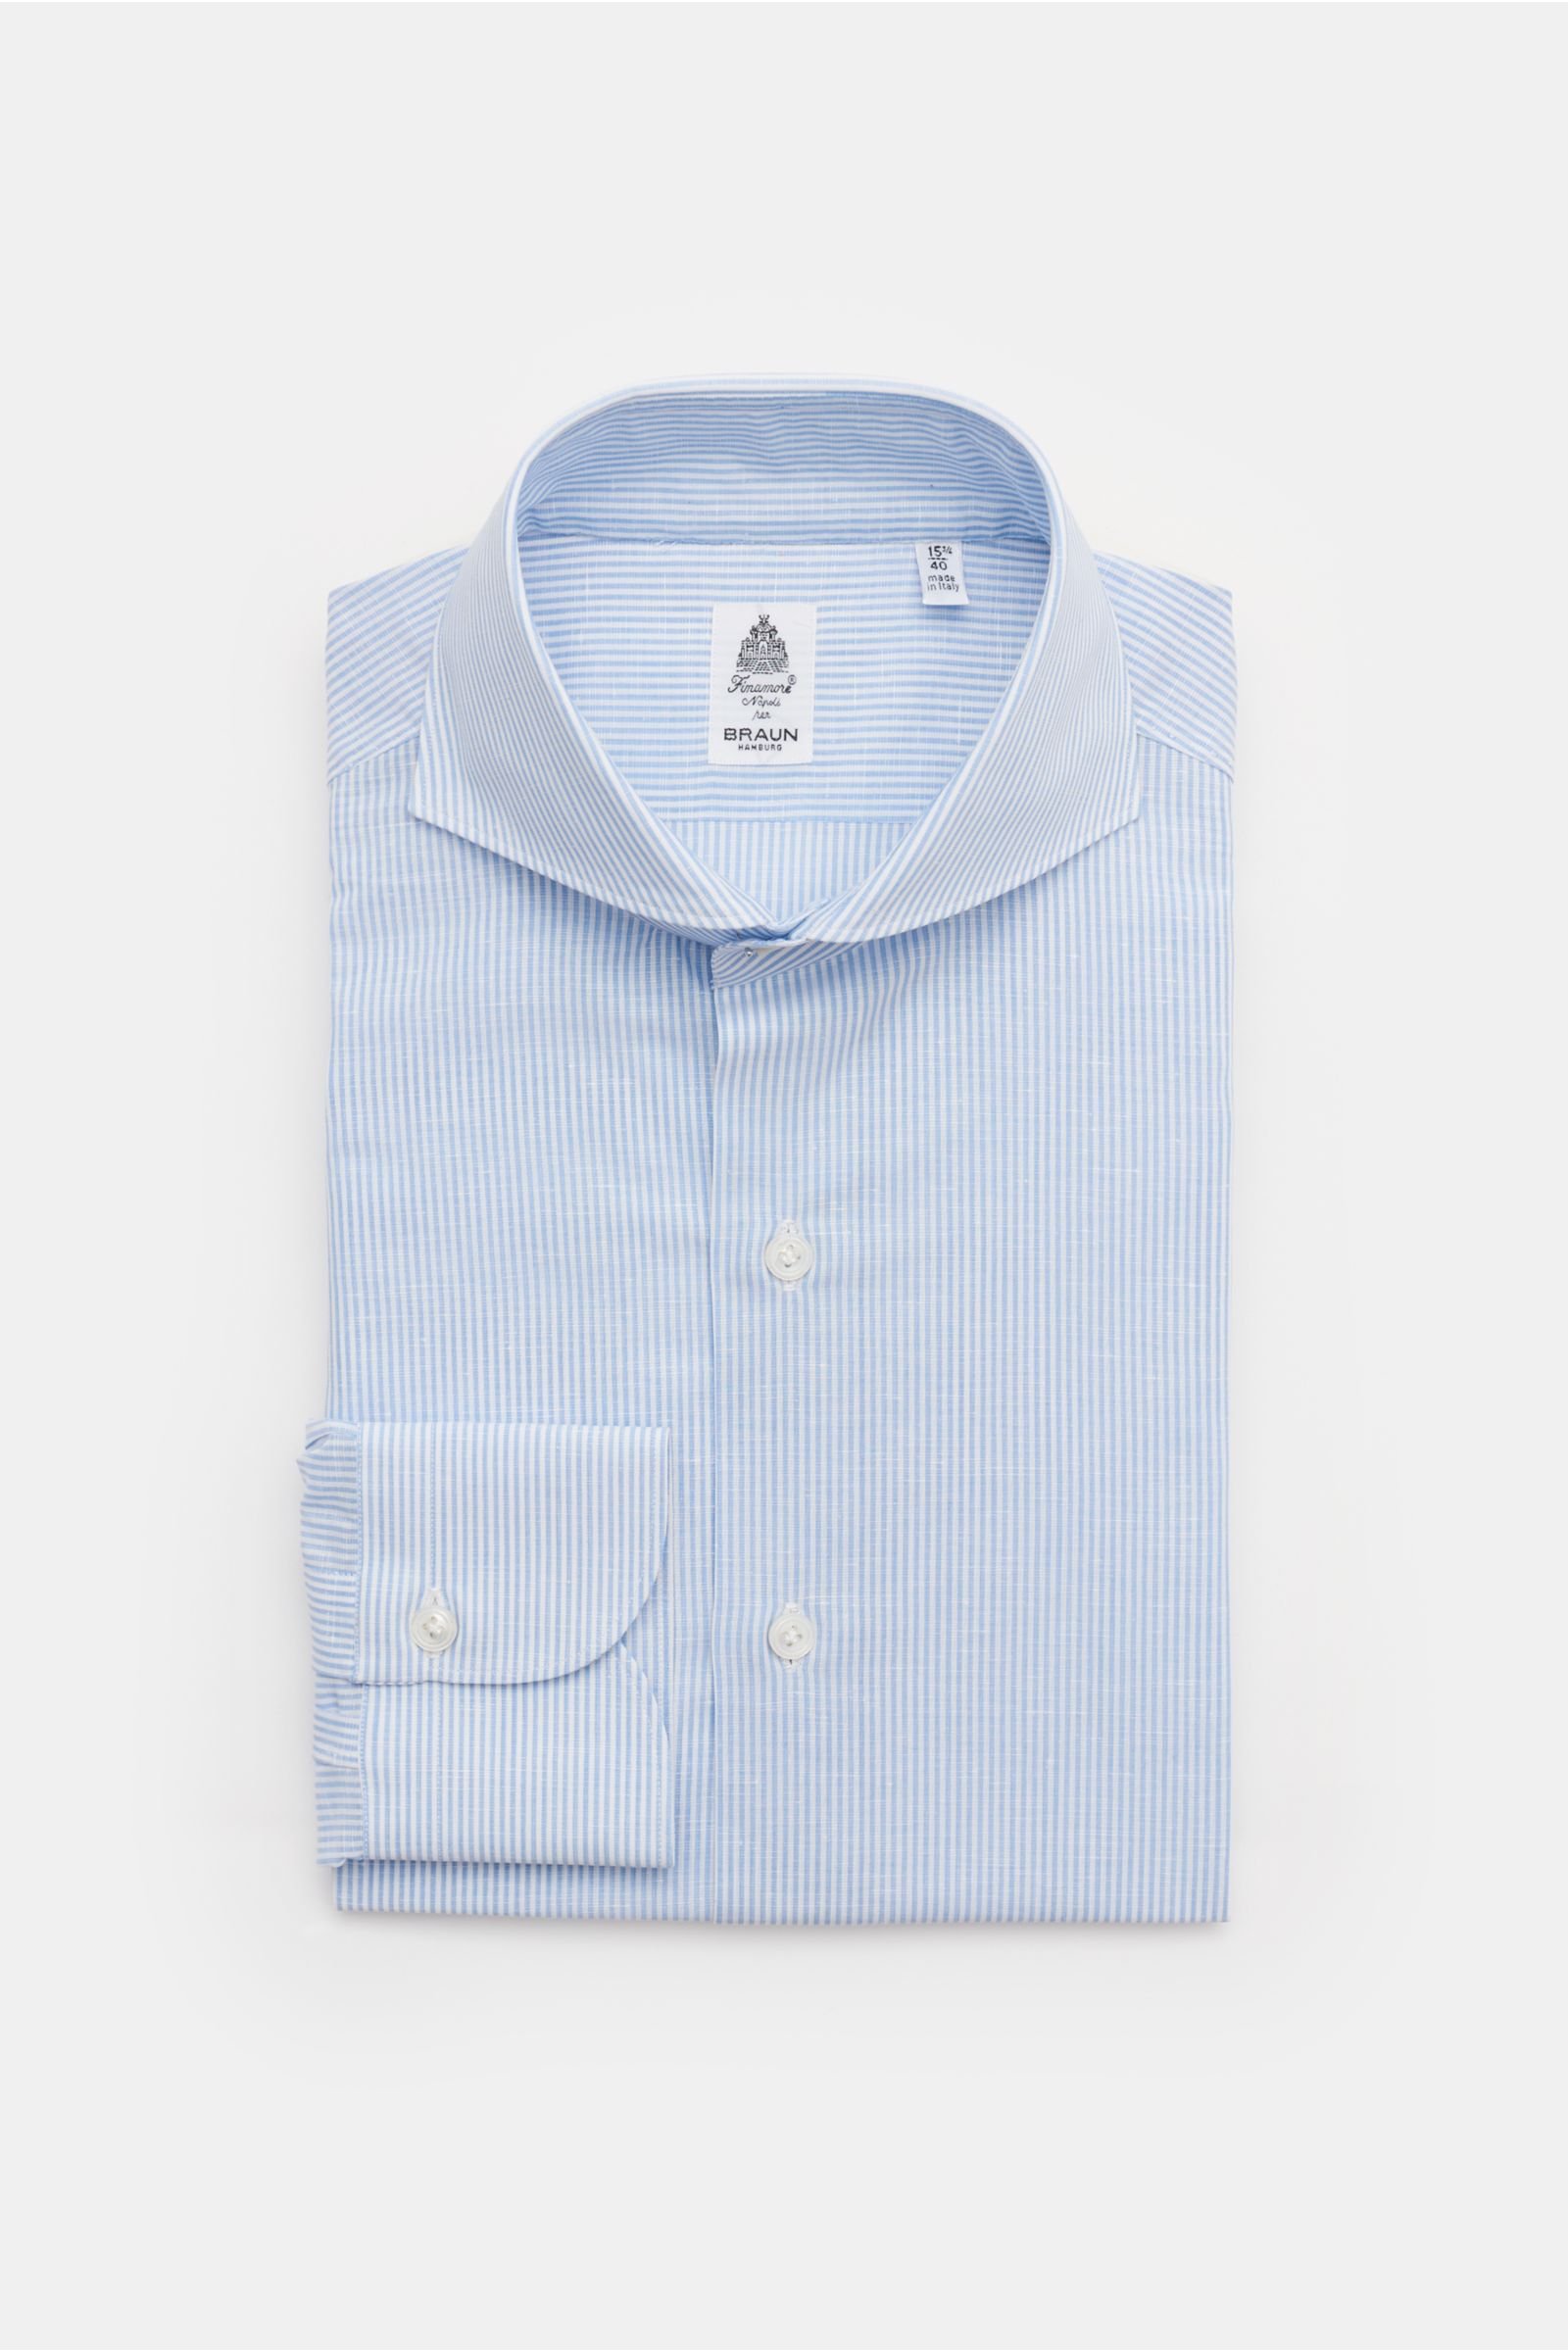 Business shirt 'Sergio Milano' shark collar light blue/white striped